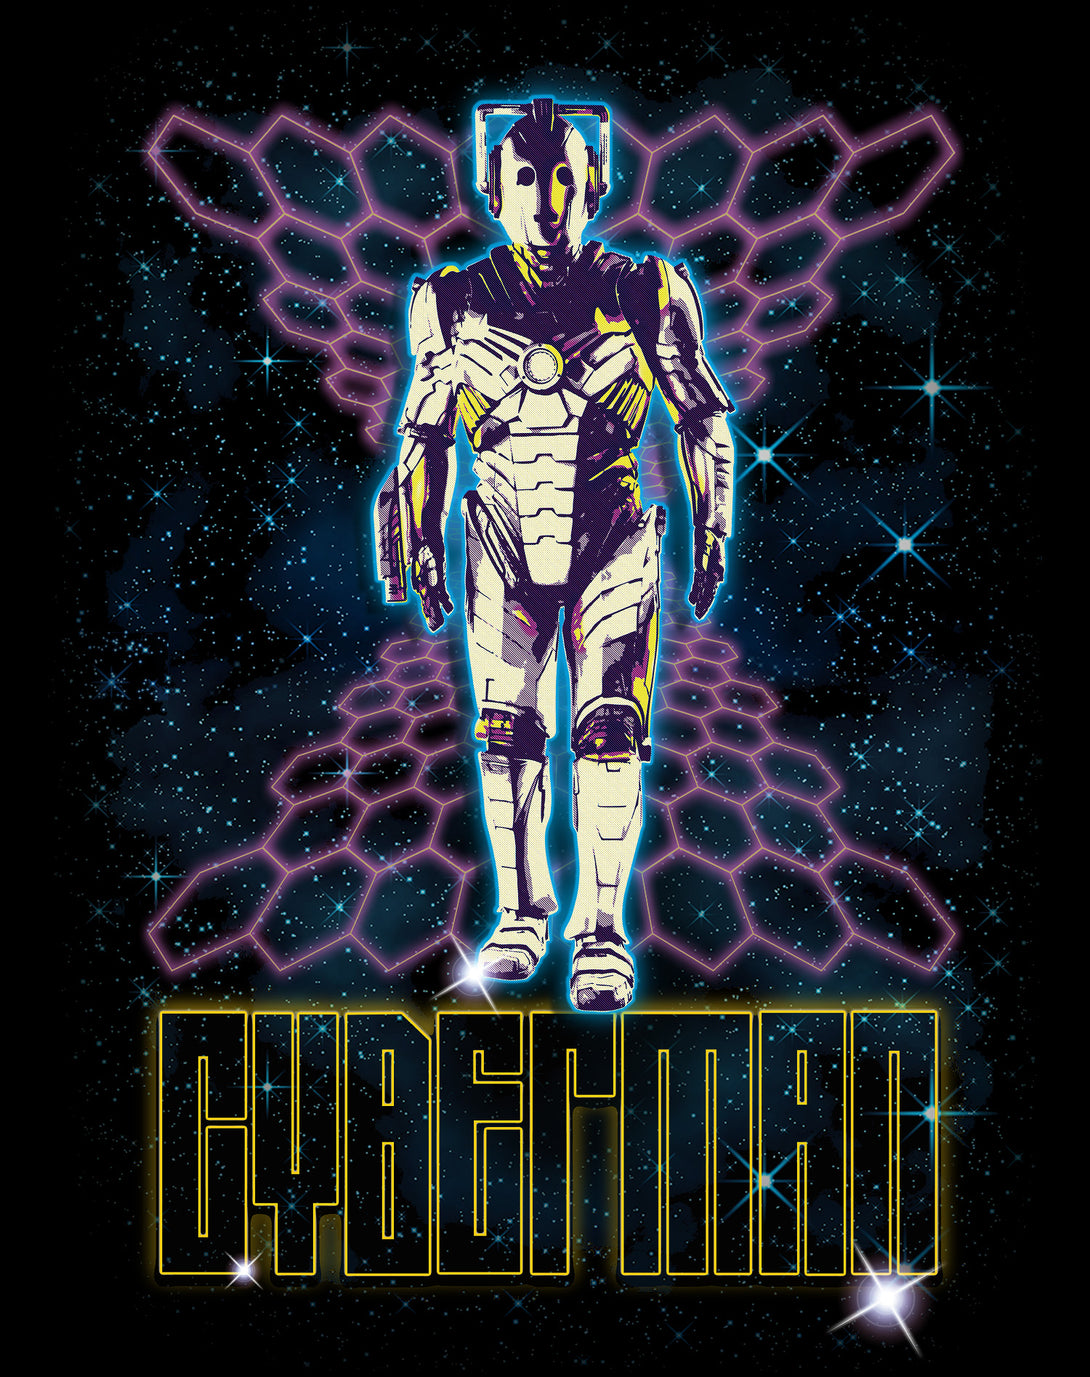 Doctor Who 80s Neon Cyberman Official Men's T-shirt Black - Urban Species Design Close Up